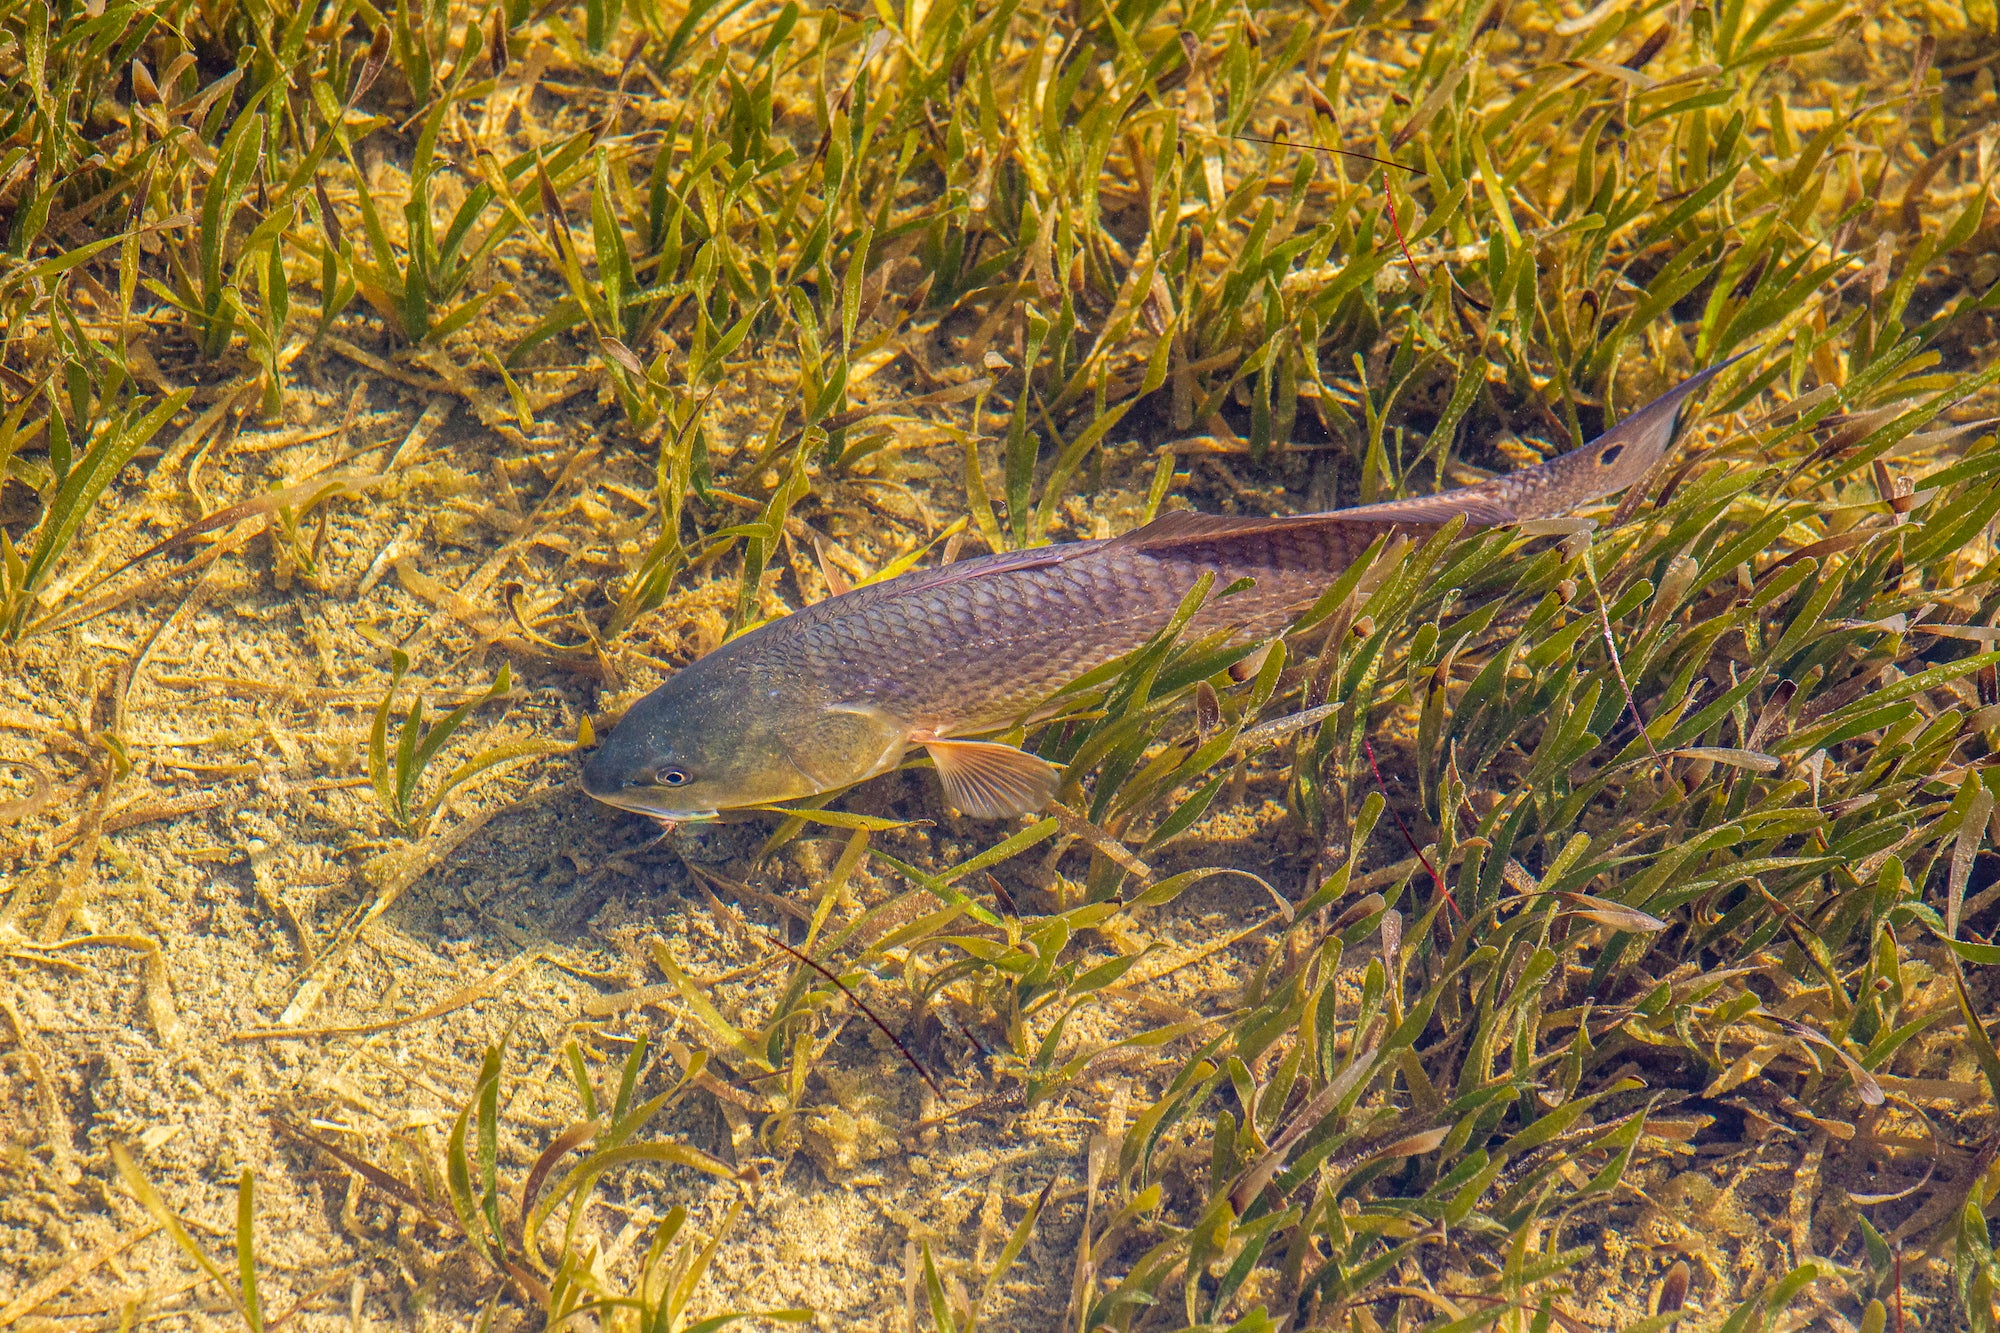 Florida redfish swimming in grass.